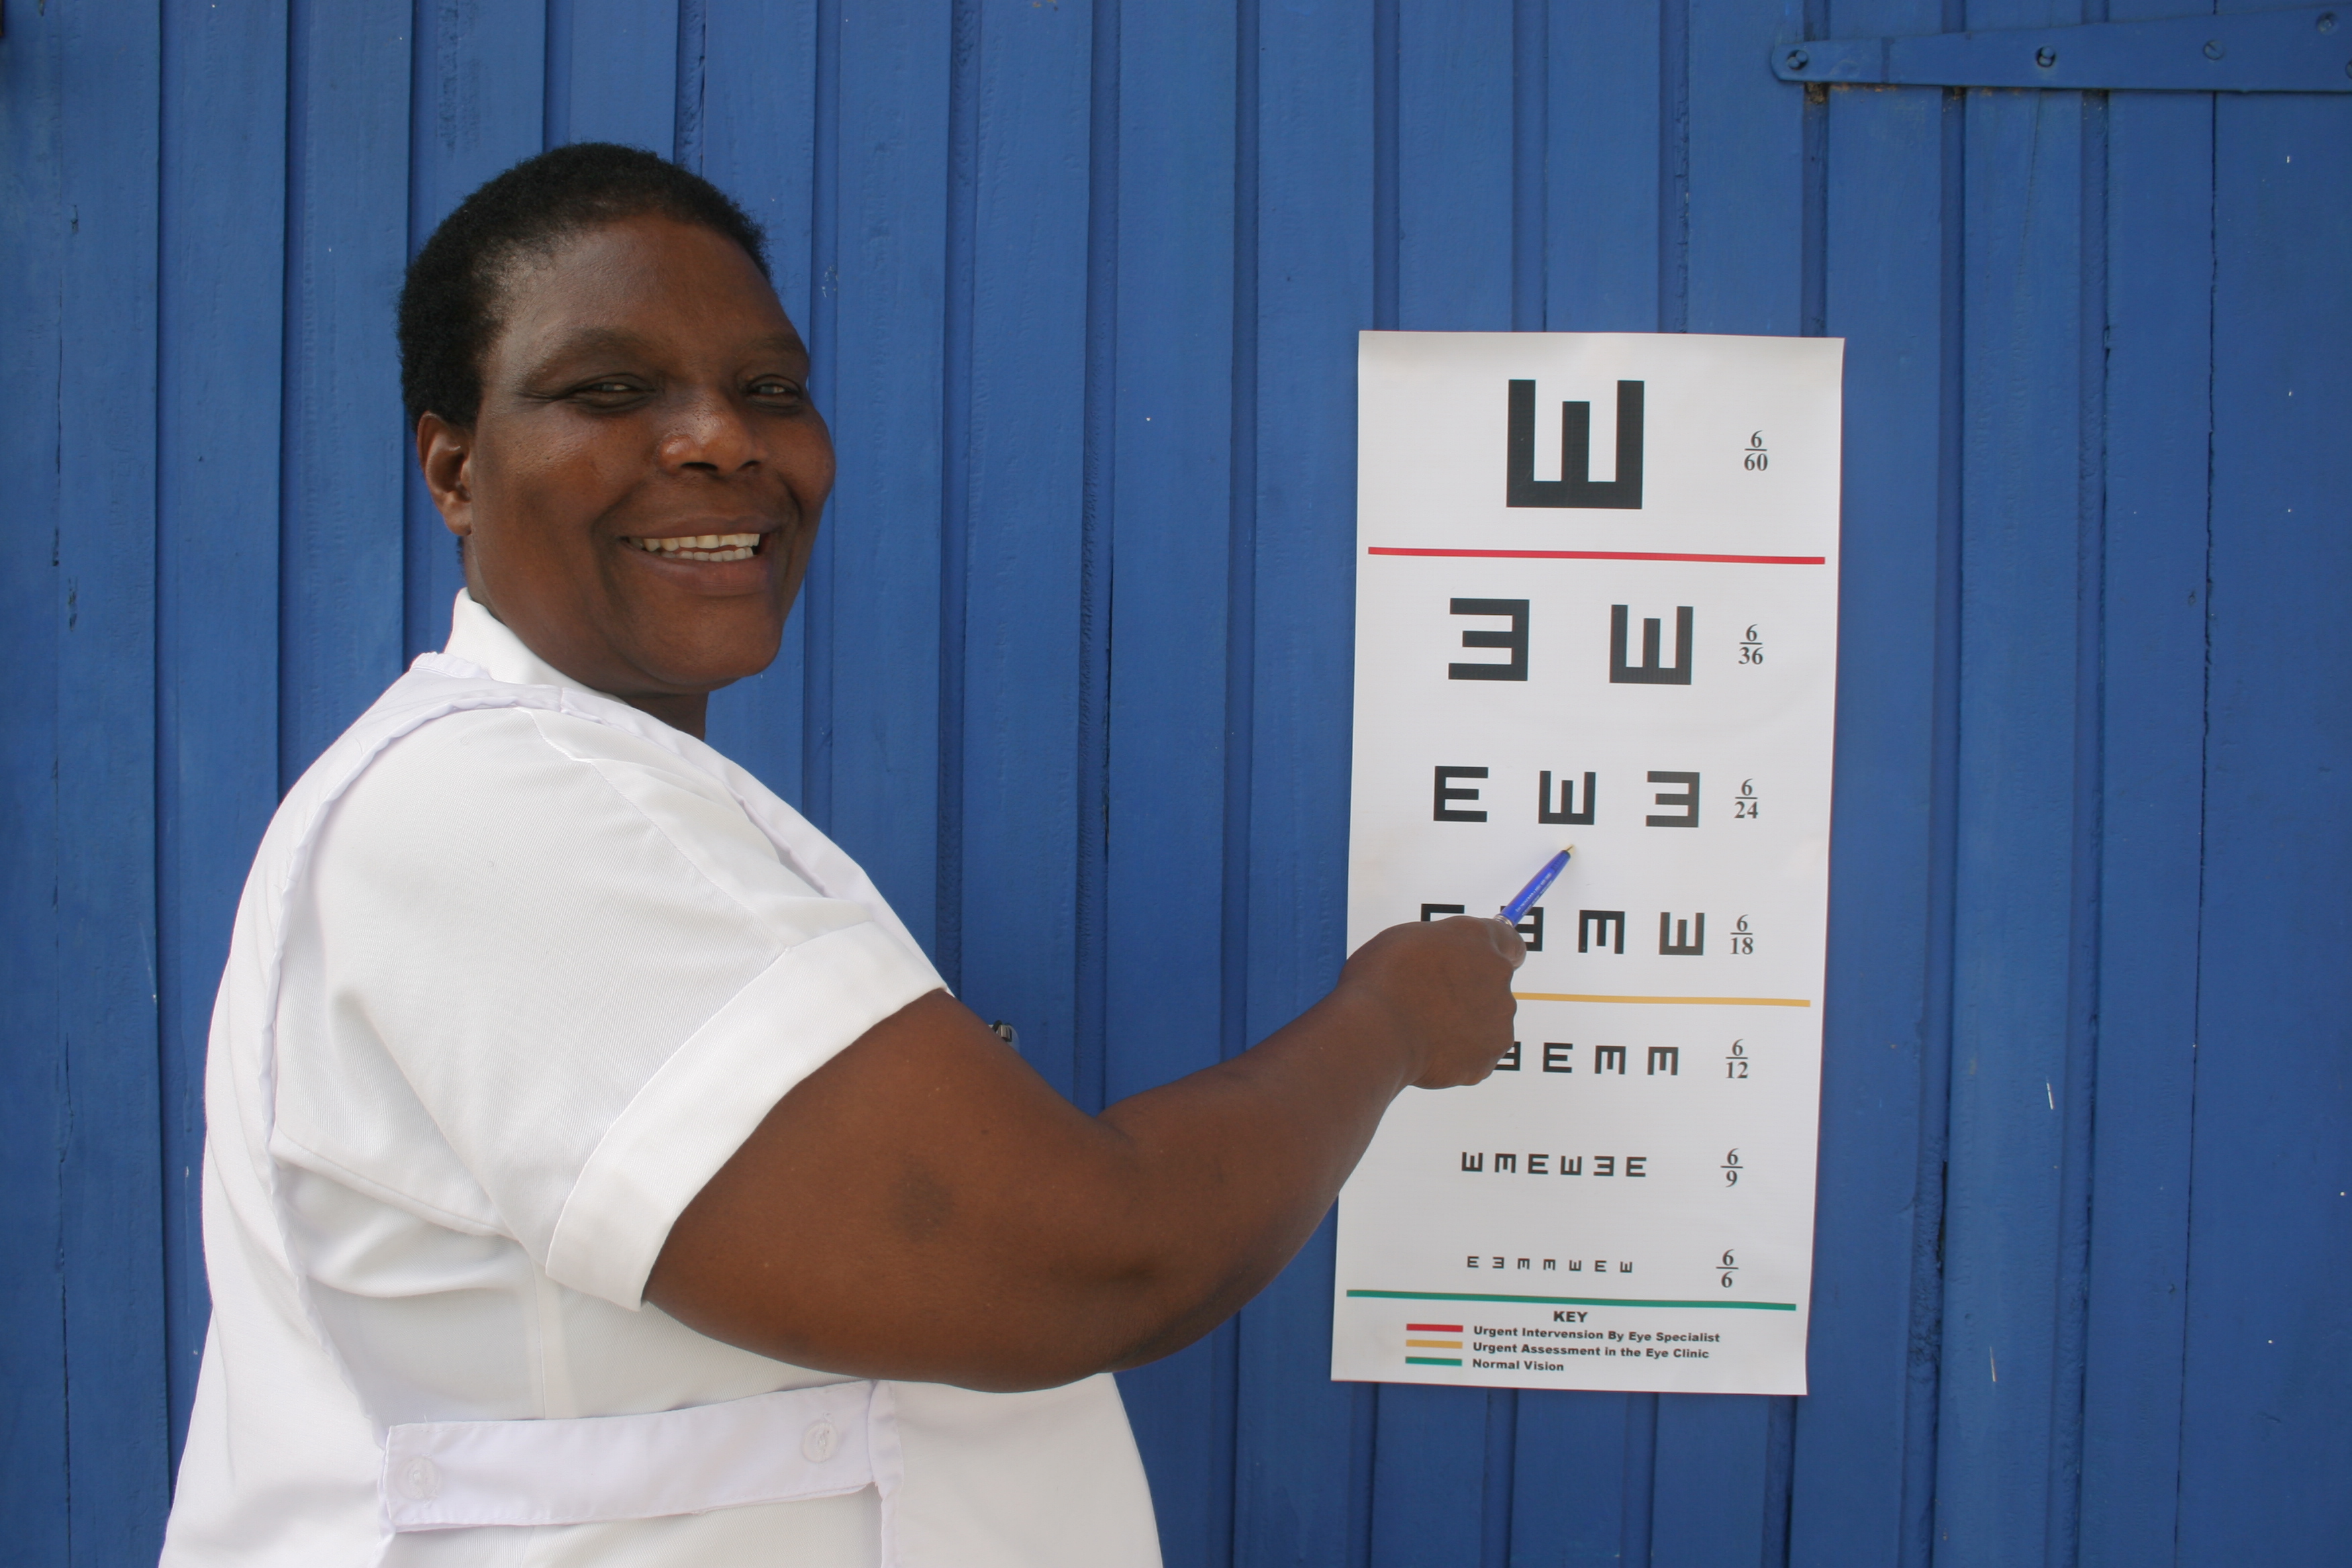 Ophthalmic Nursing School Project in Ghana will strengthen ophthalmic nursing in Ghana.